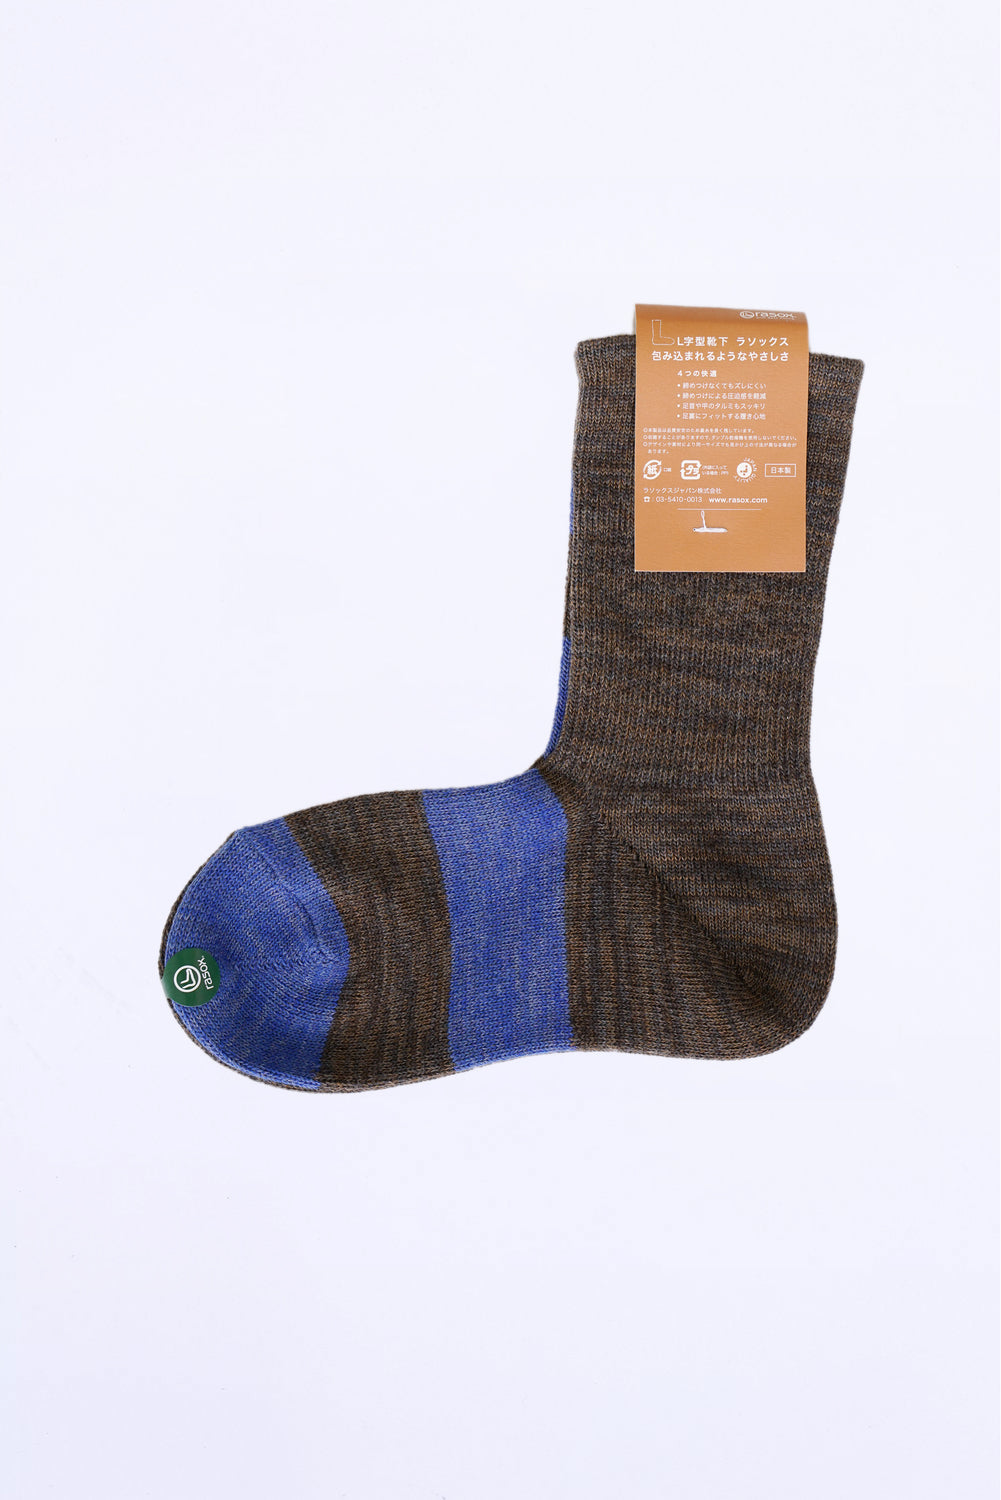 Asymmetry Socks Brown and Blue